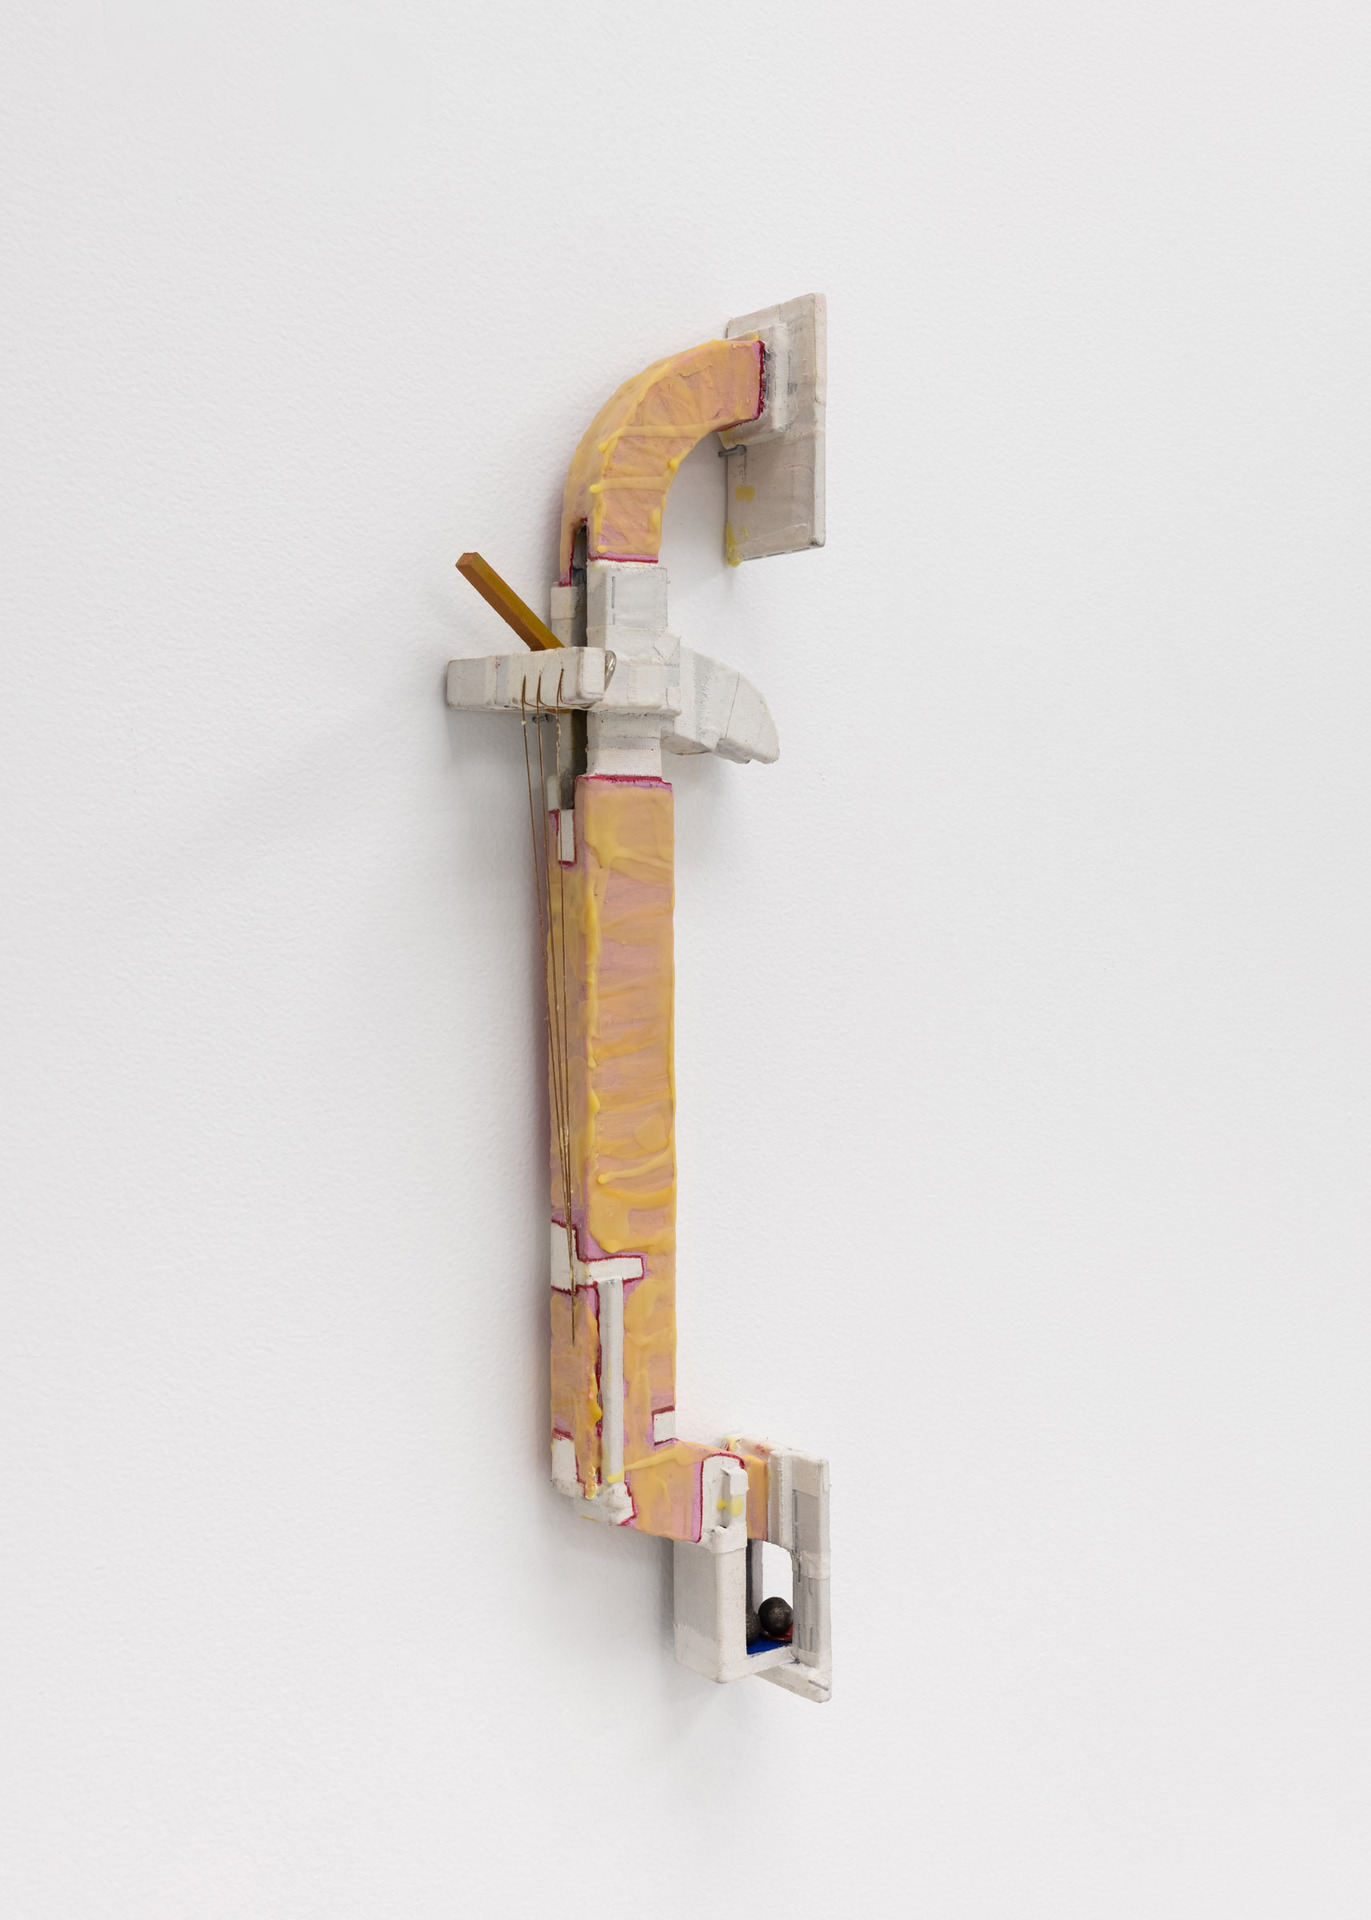 Marlon Kroll, 2020, Of my partner, MDF, muslin, paint, coked pencil, thread, coins, oilskin,  21 x 6.5 x 2.5 inches